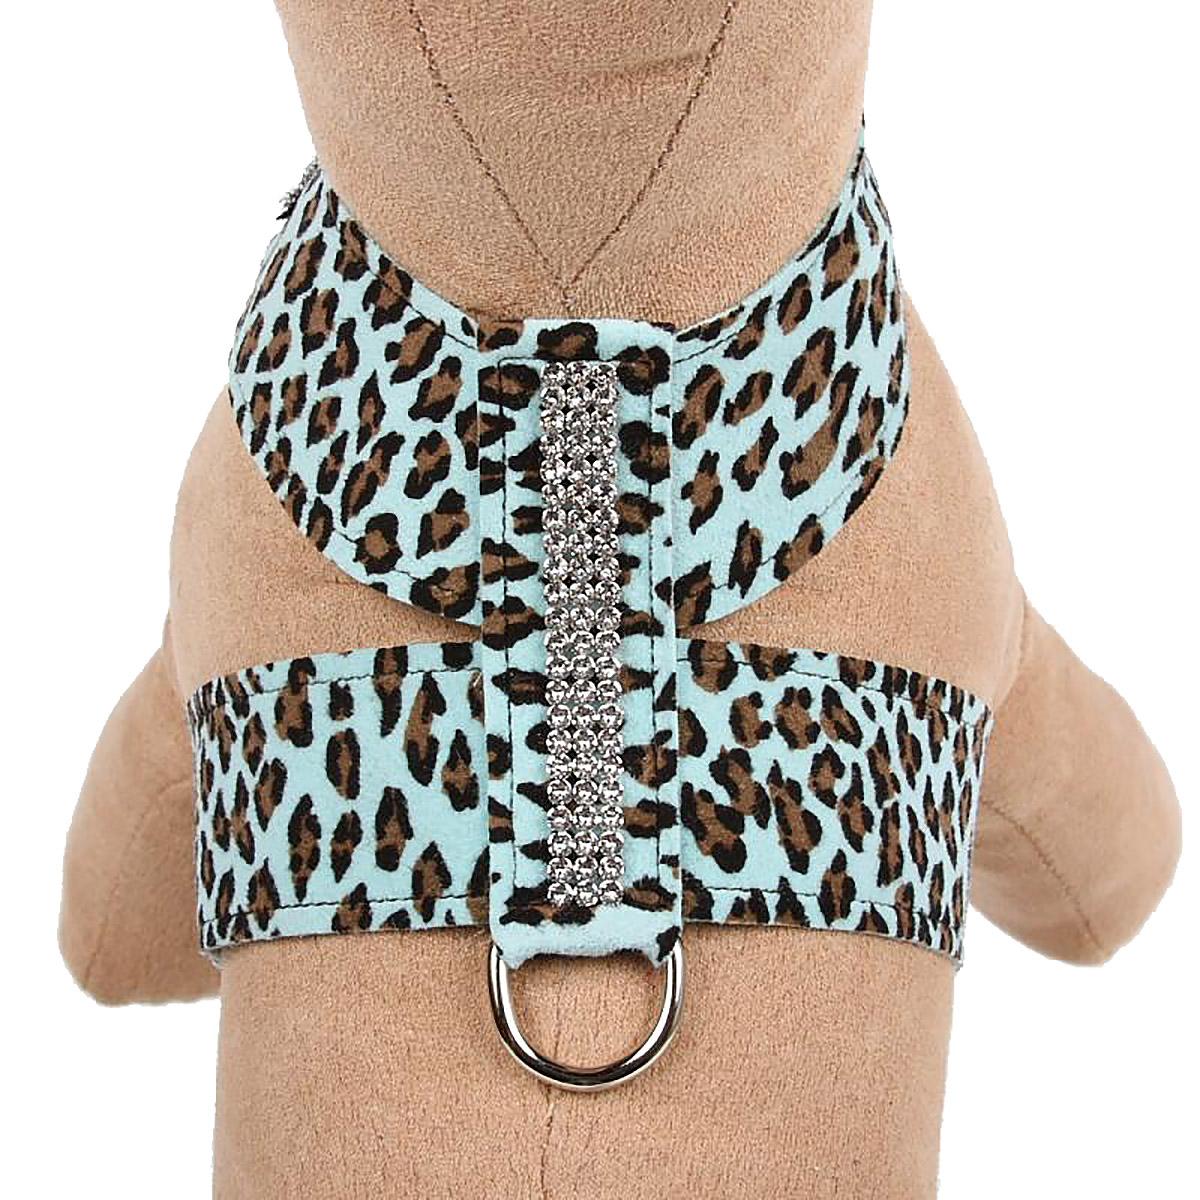 Cheetah Couture Giltmore Tinkie Dog Harness by Susan Lanci - Tiffi Cheetah